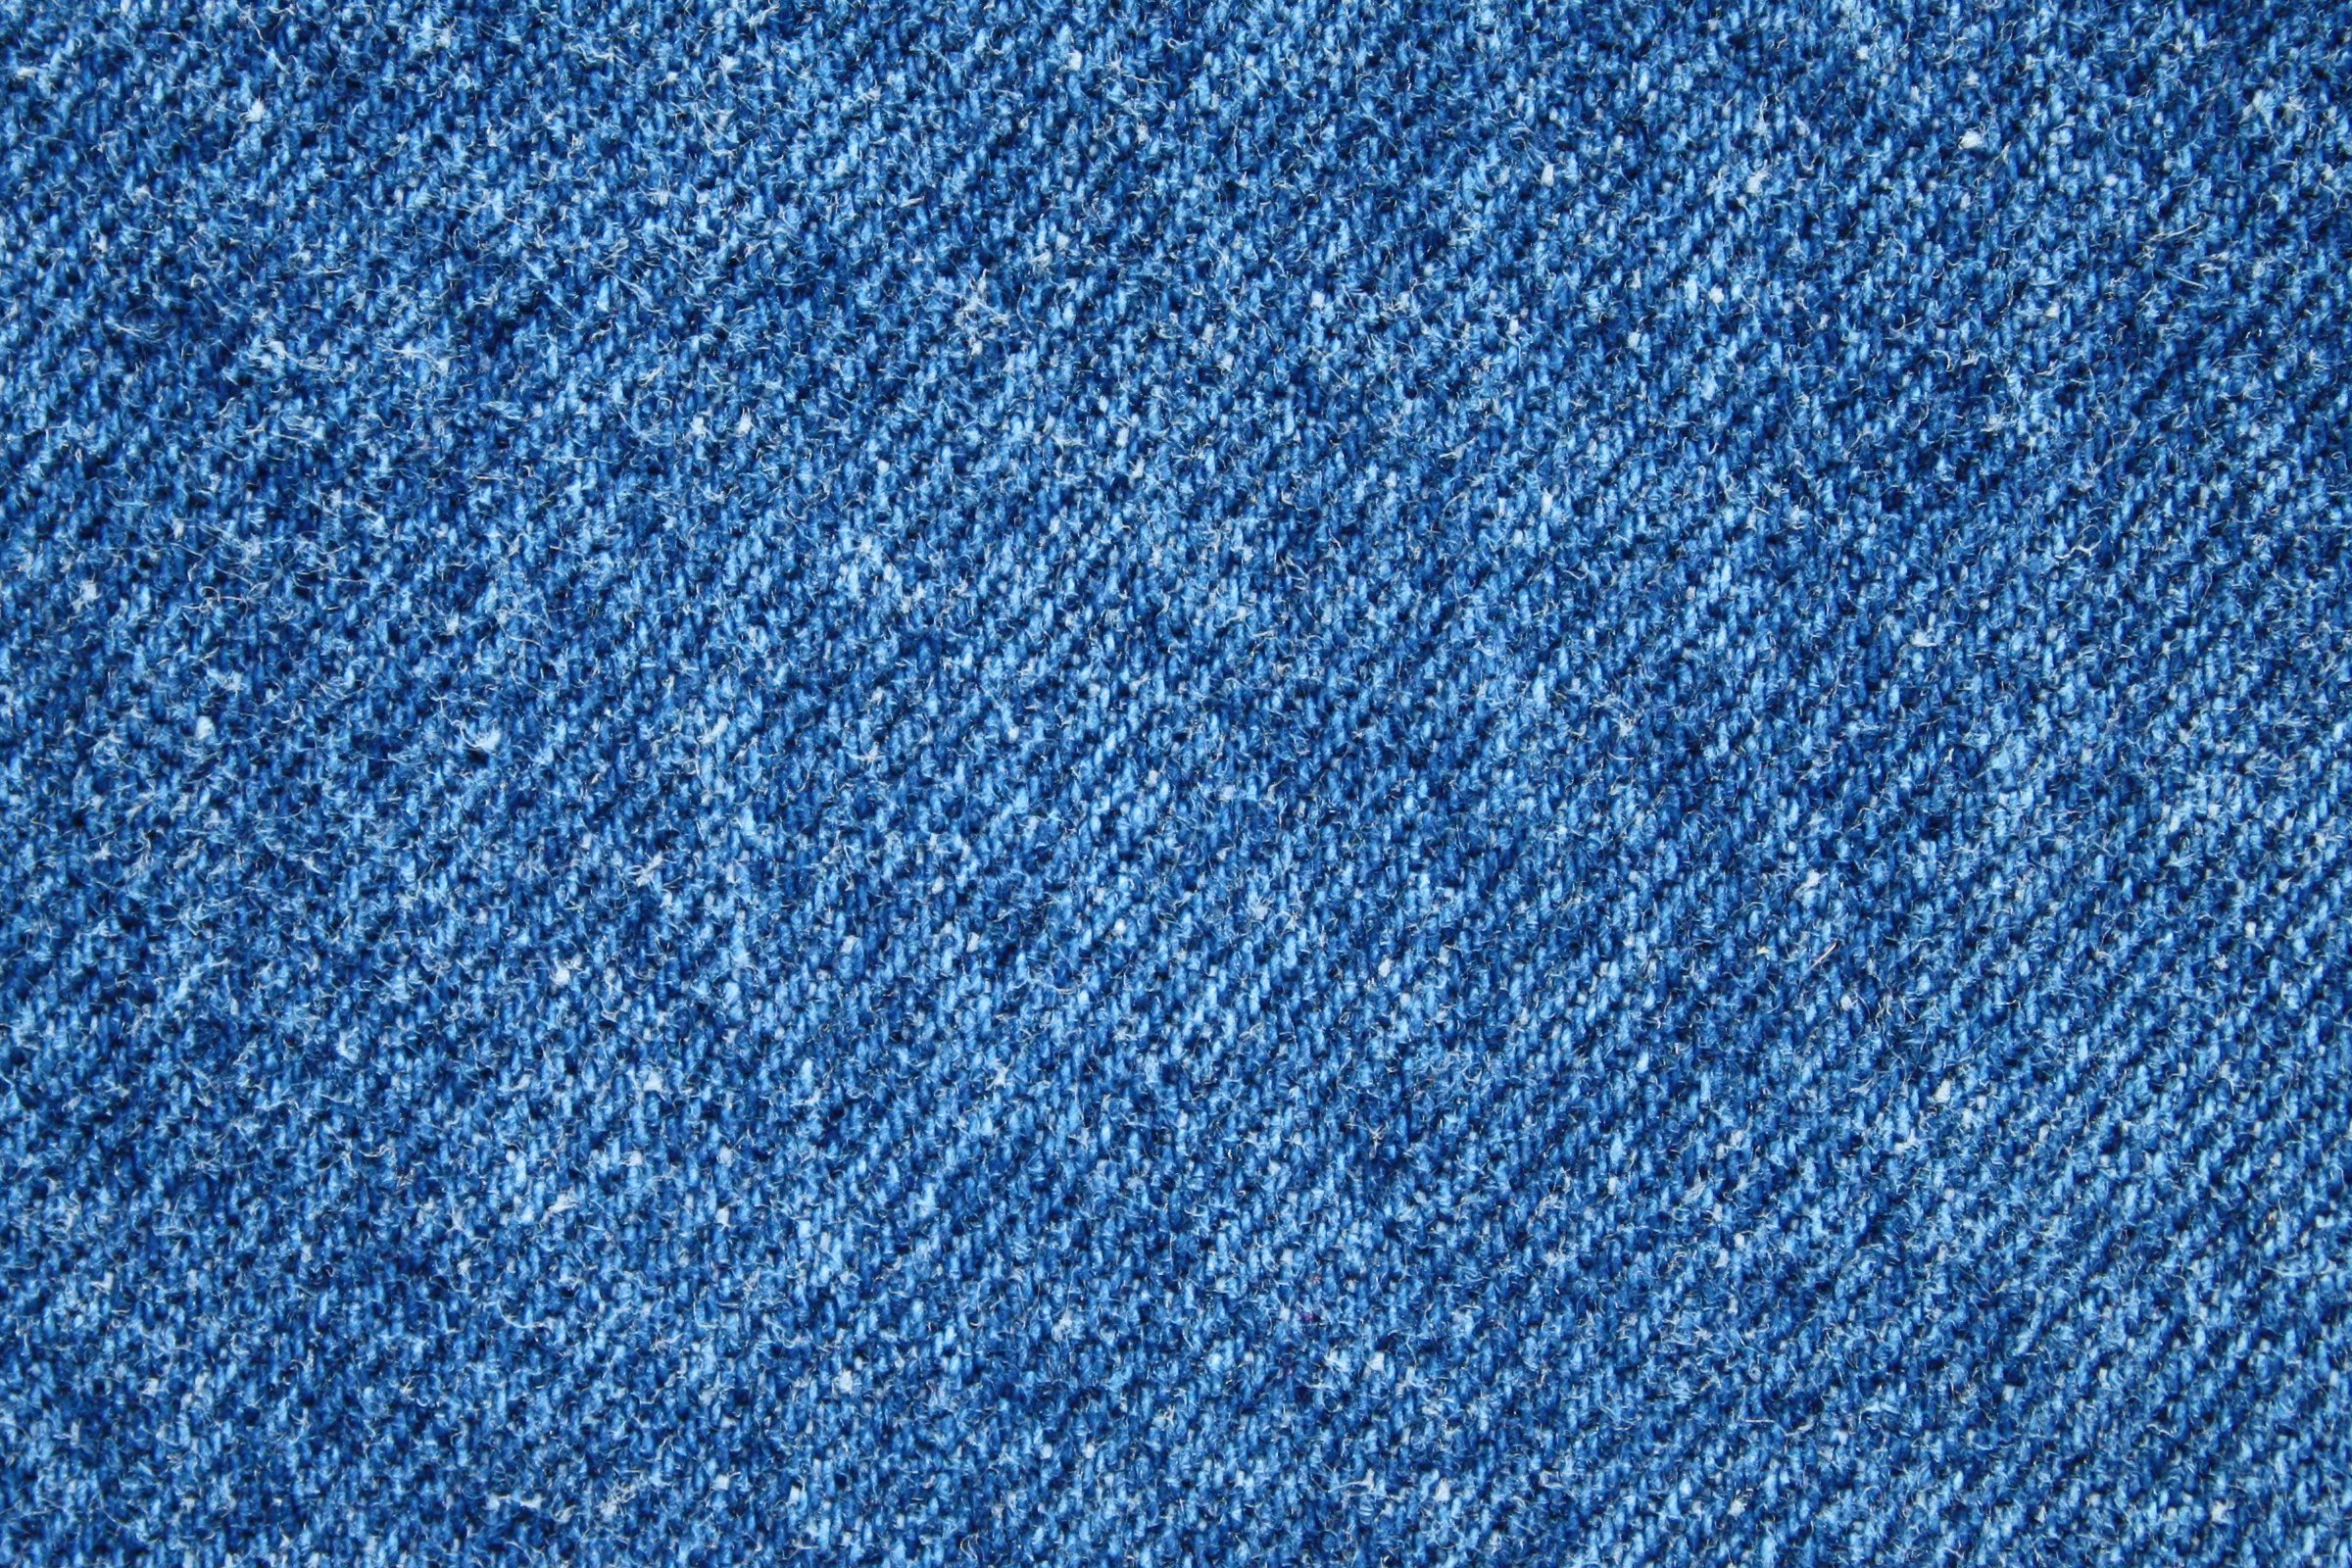 Blue Denim Fabric Closeup Texture Picture | Free Photograph | Photos